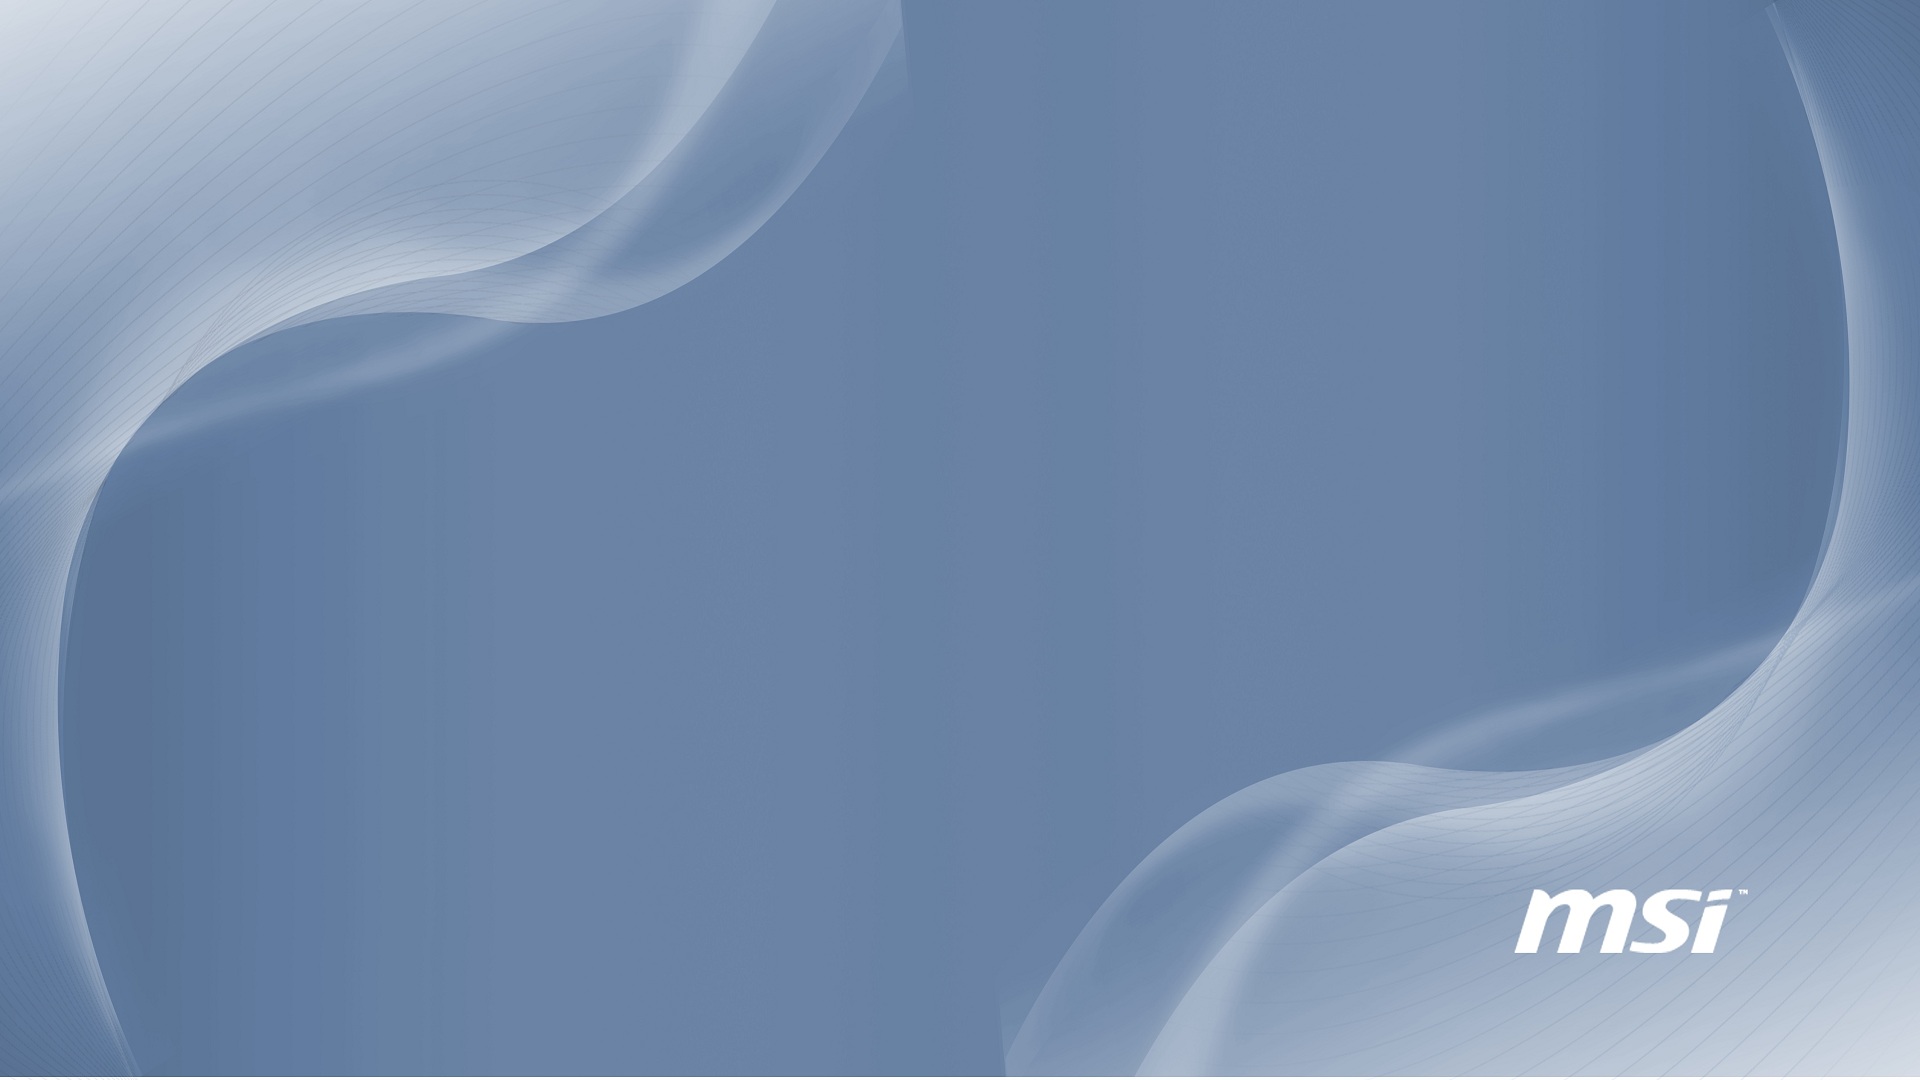 Netbook Msi Wallpaper 1920x1080   Blue HD Desktop Background 1920x1080